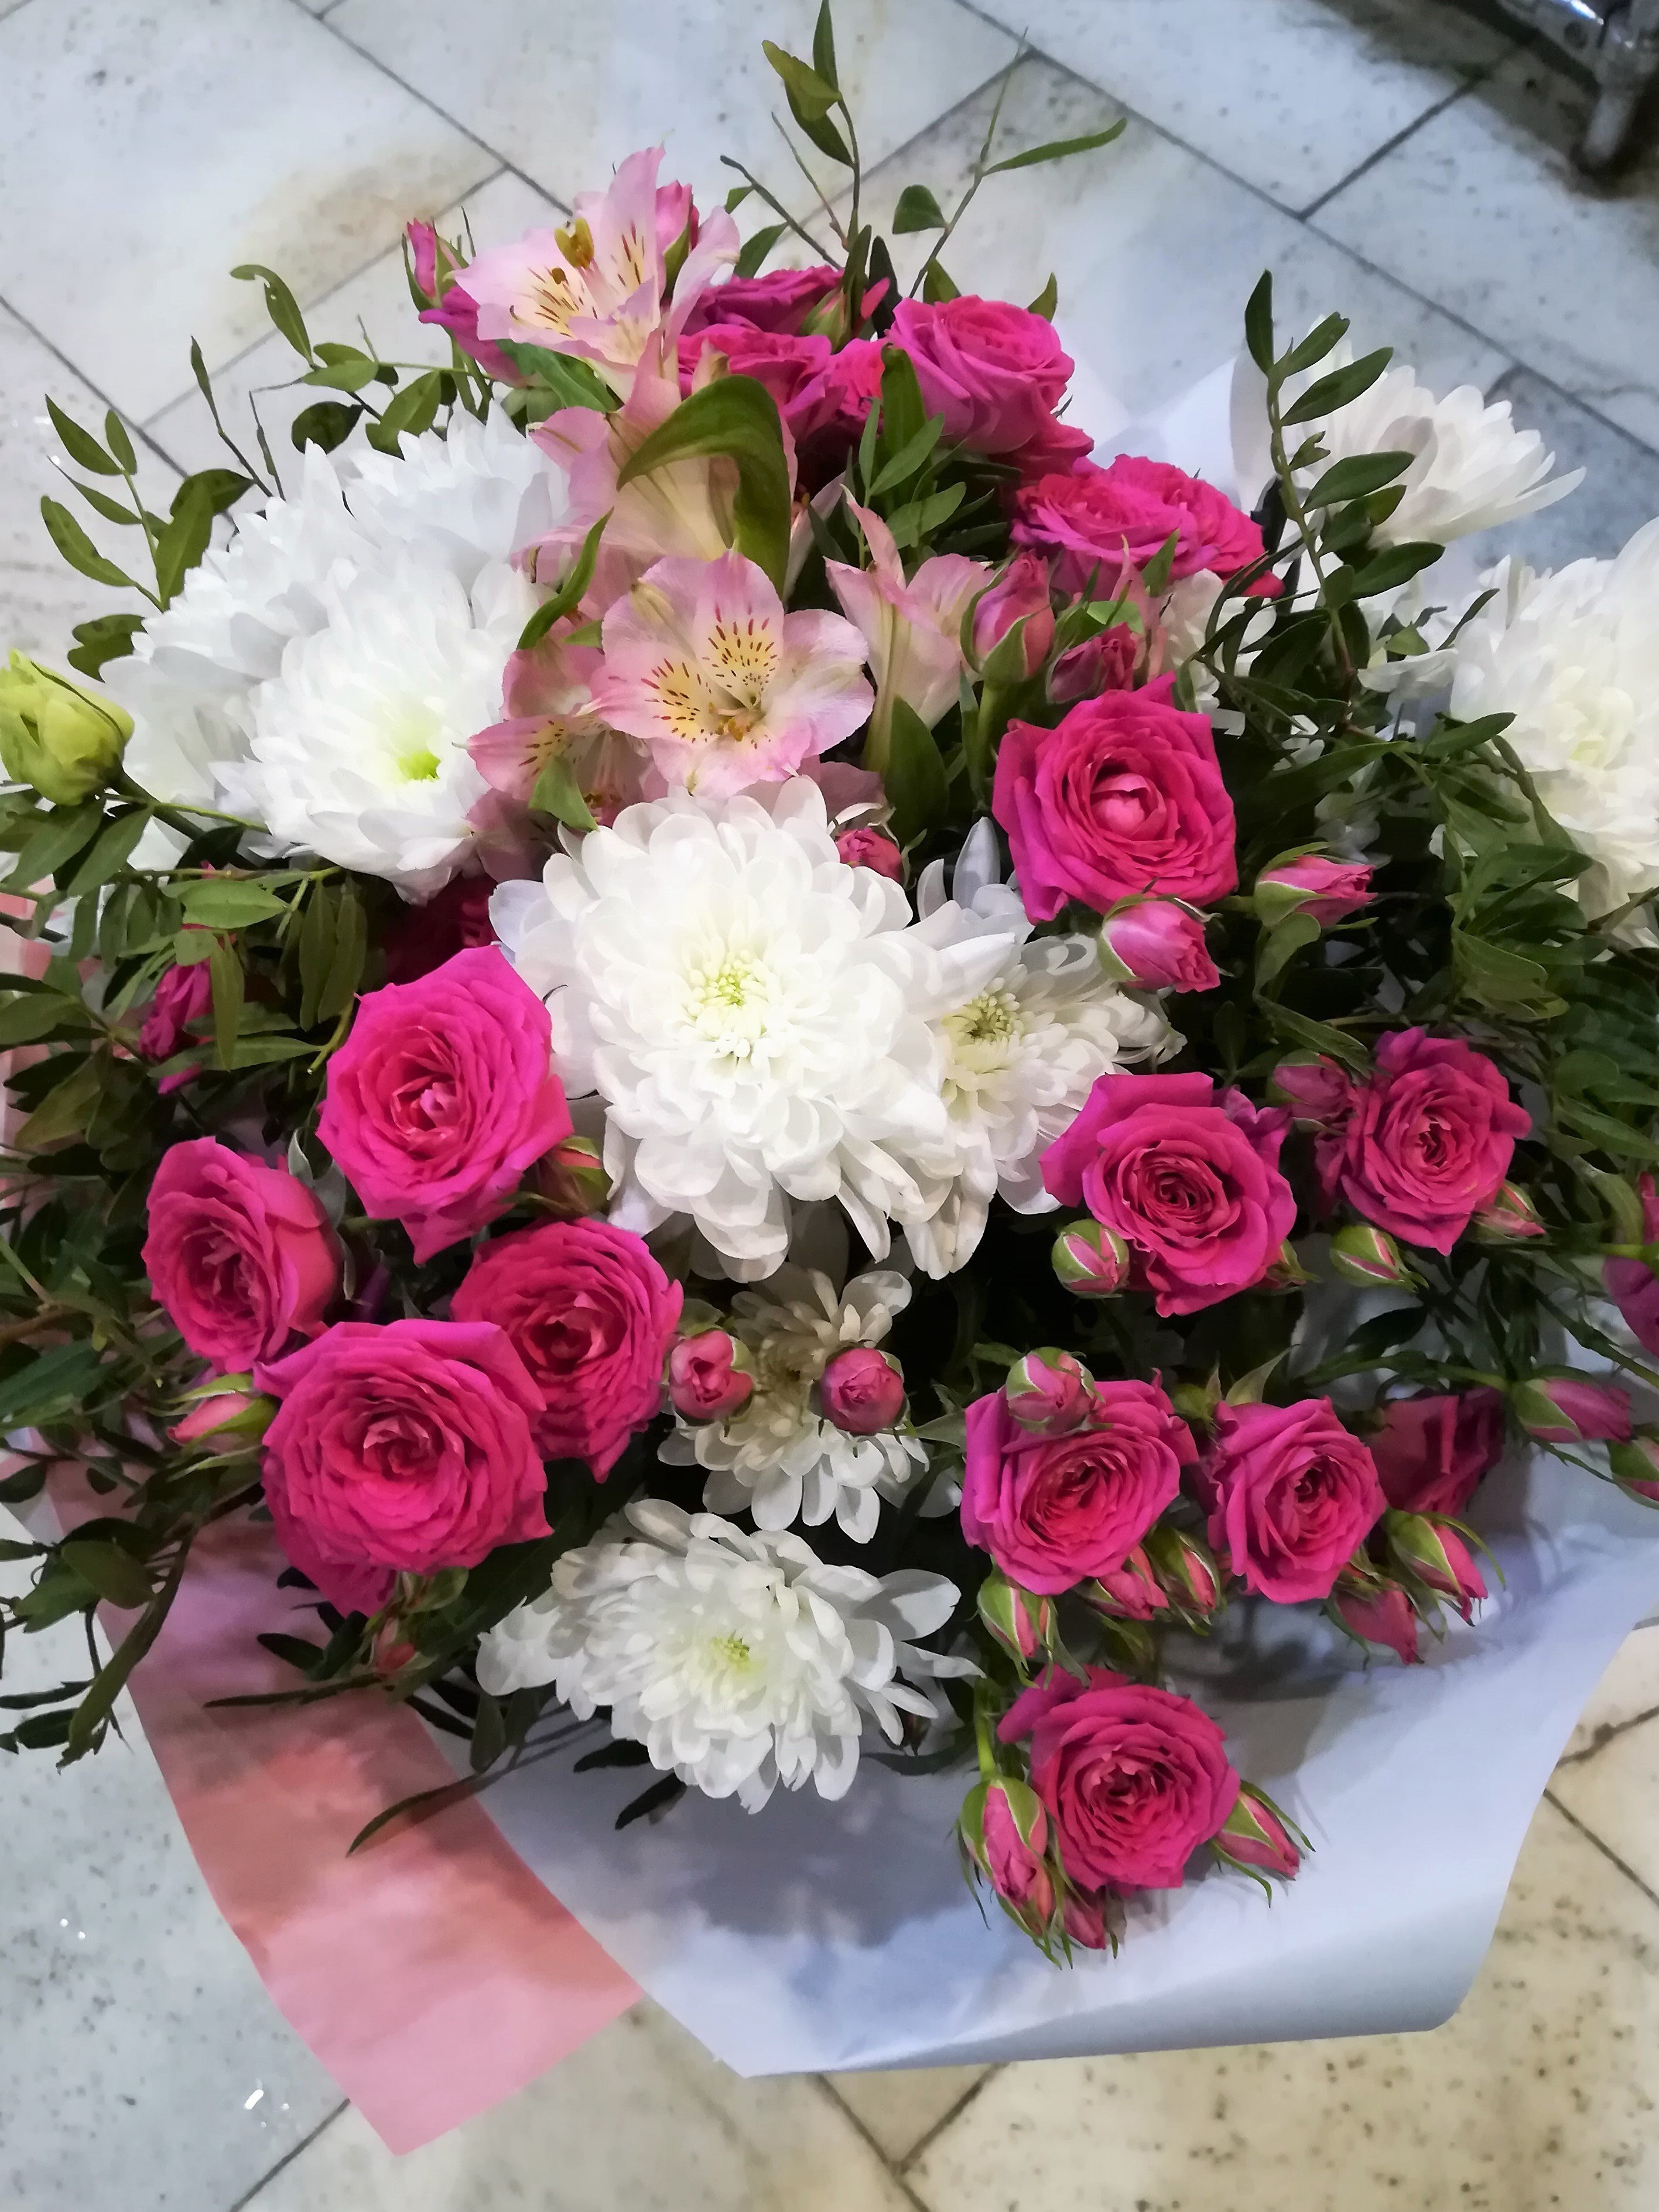  цветов из роз и хризантем (61 фото)